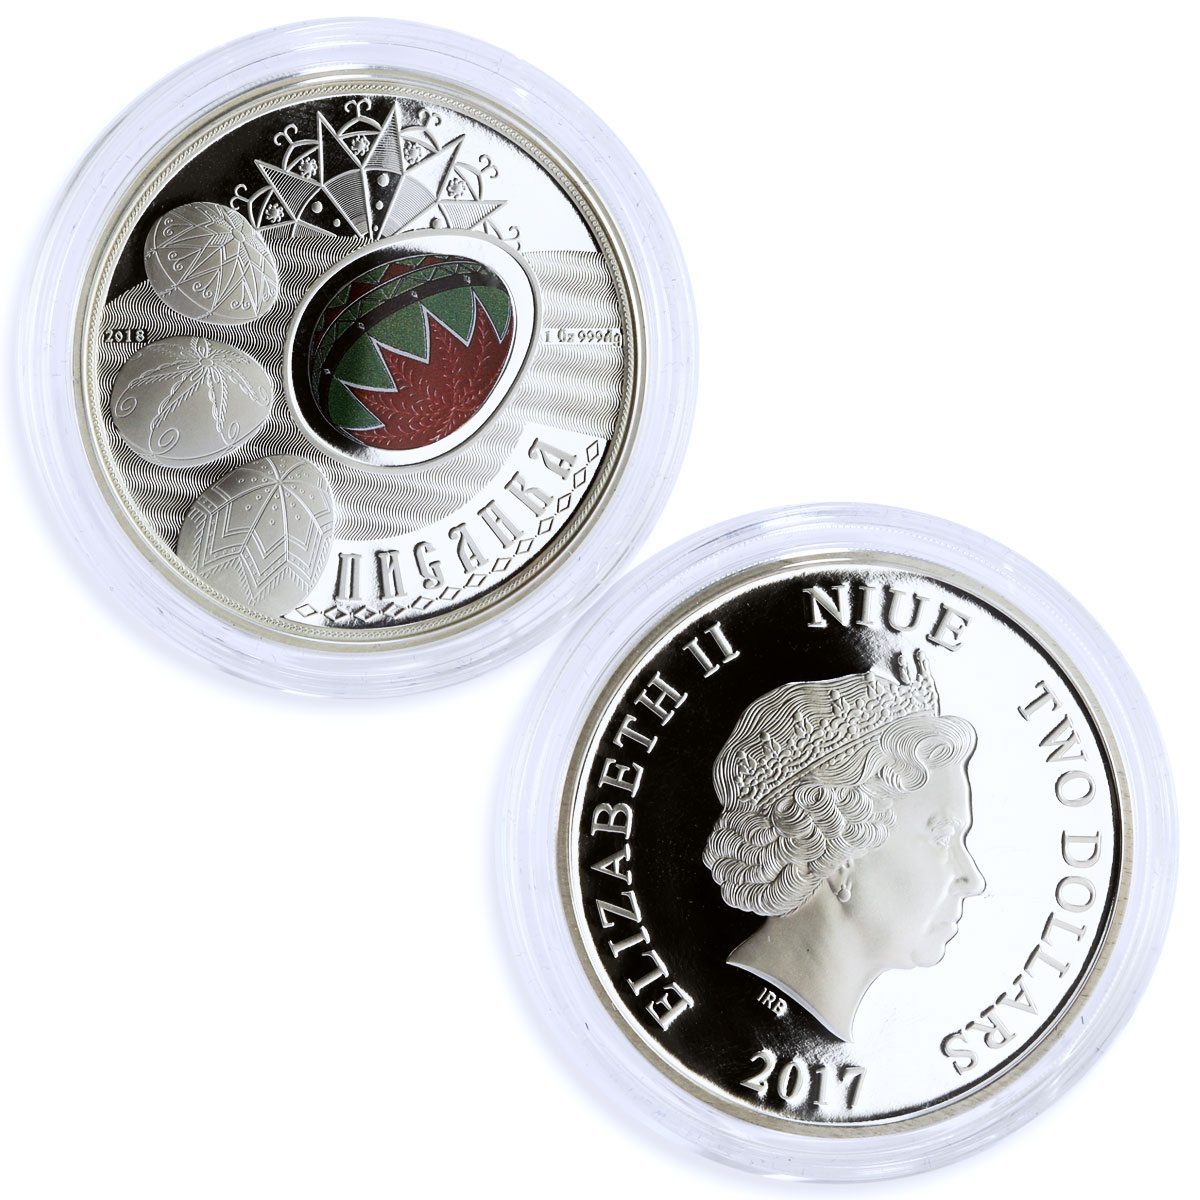 Niue set of 8 coins Ukrainian Symbols Averters colored silver coins 2017 - 2018